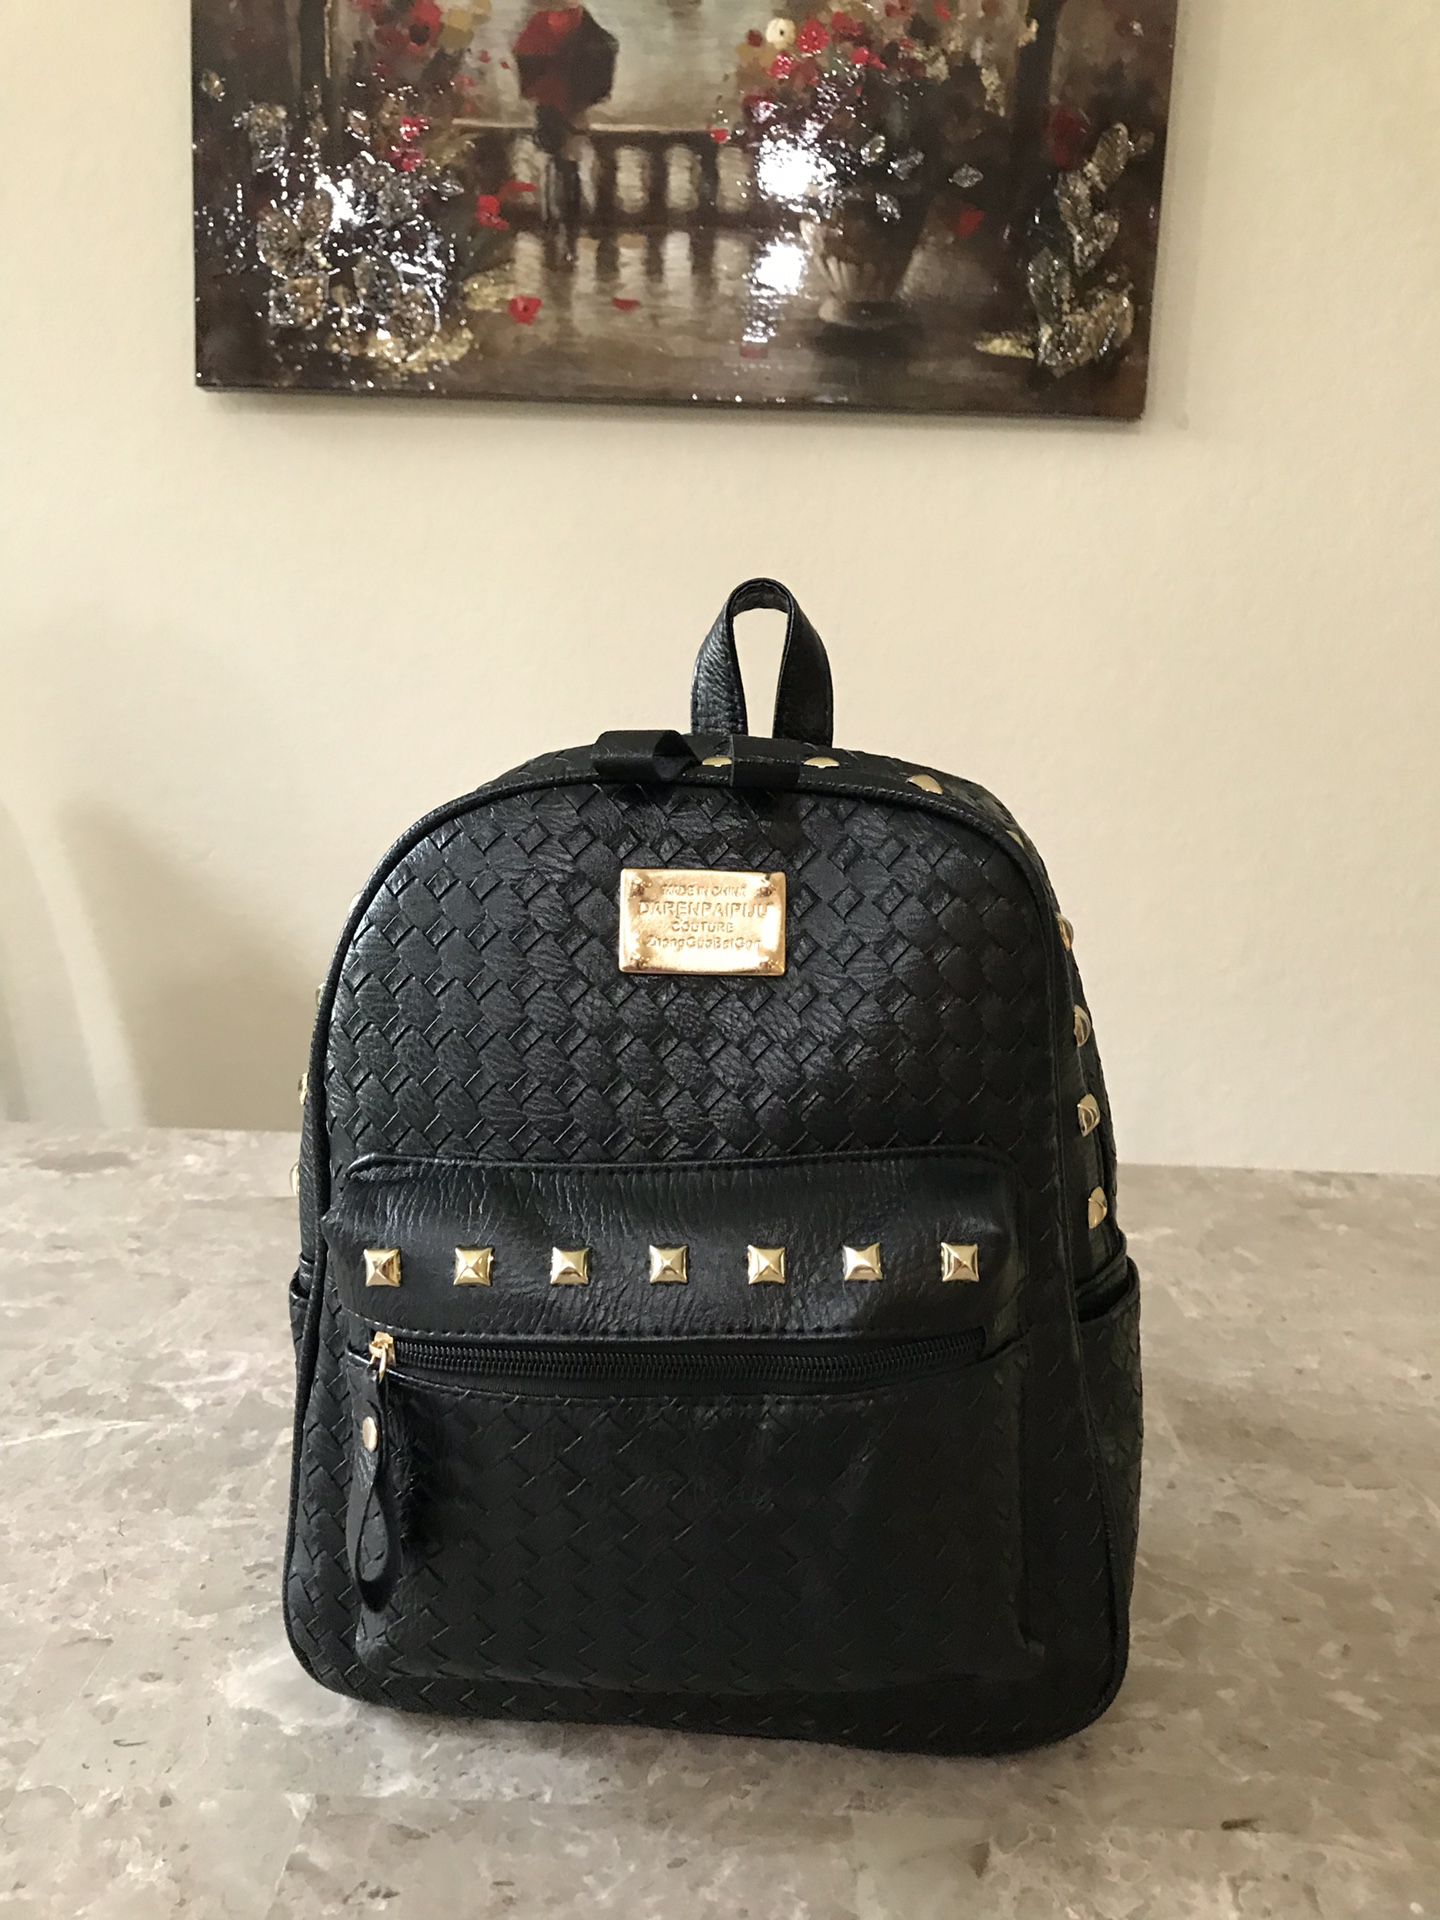 PU leather backpack purse